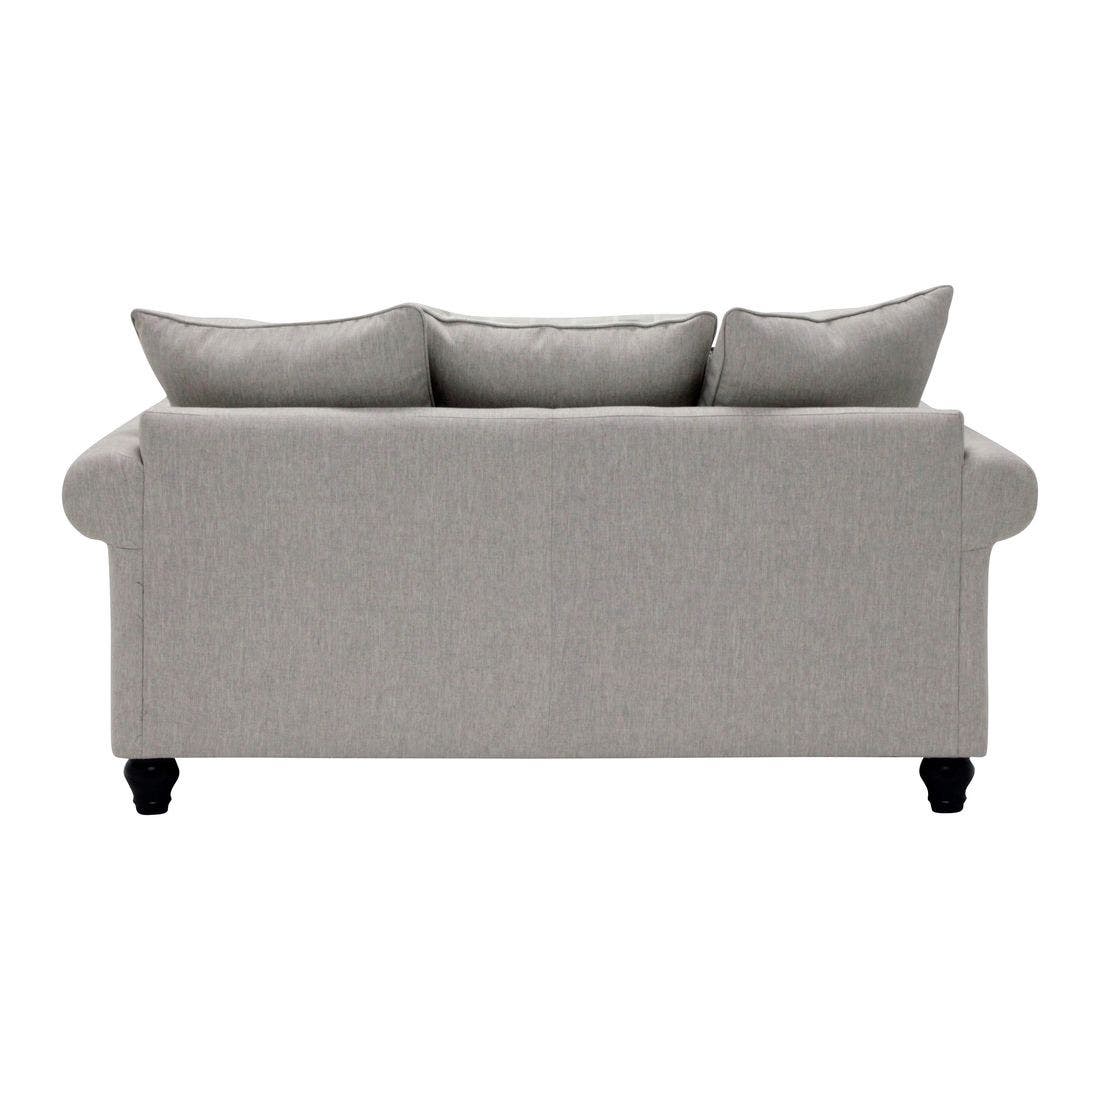 19191989-horally-furniture-sofa-recliner-sofa-01